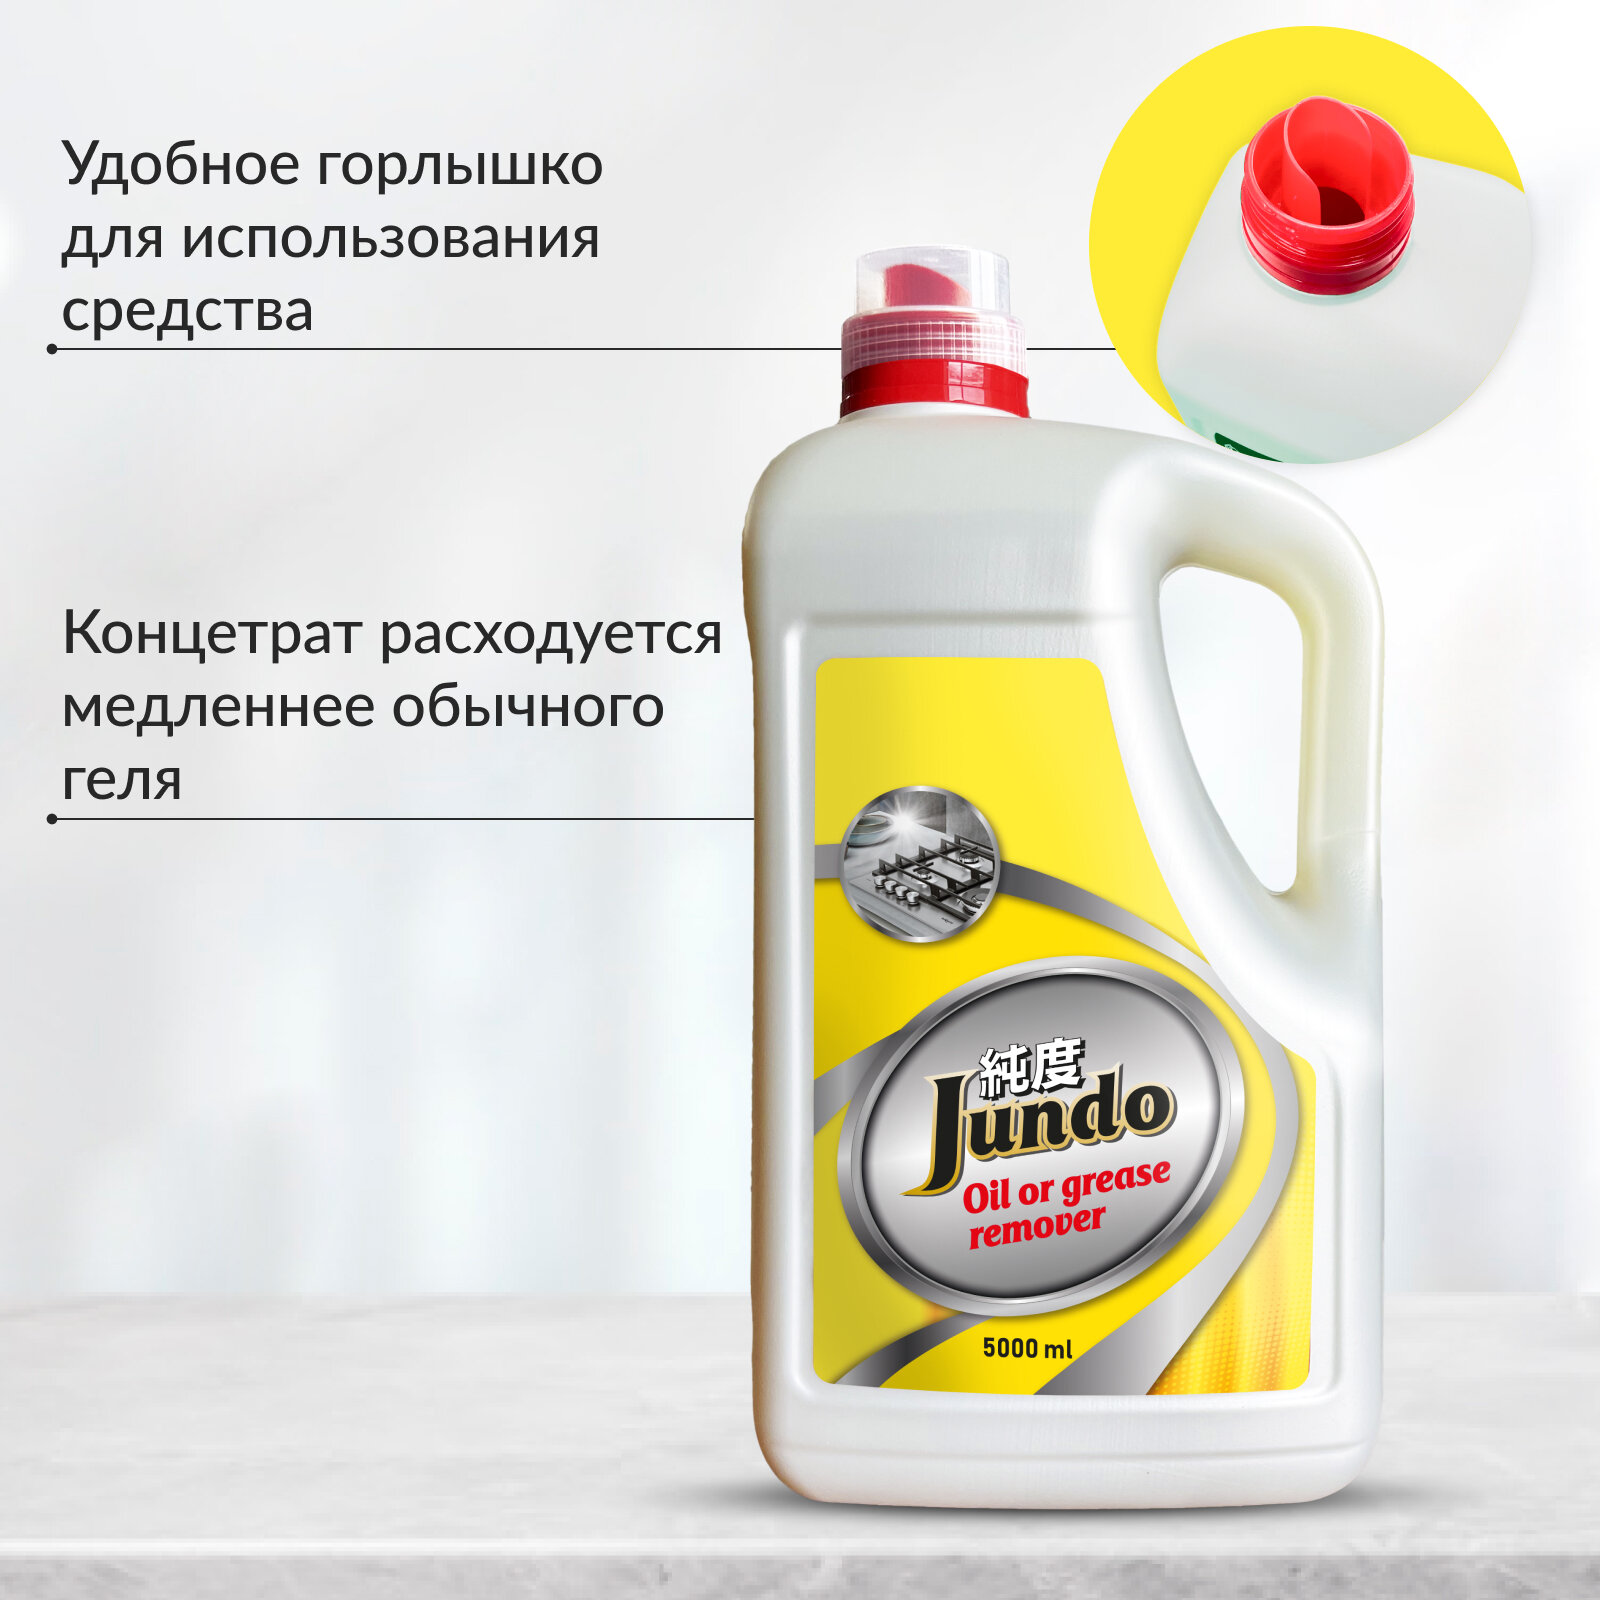 Жироудалитель Jundo Oil or Grease remover, концентрированный, 5 л